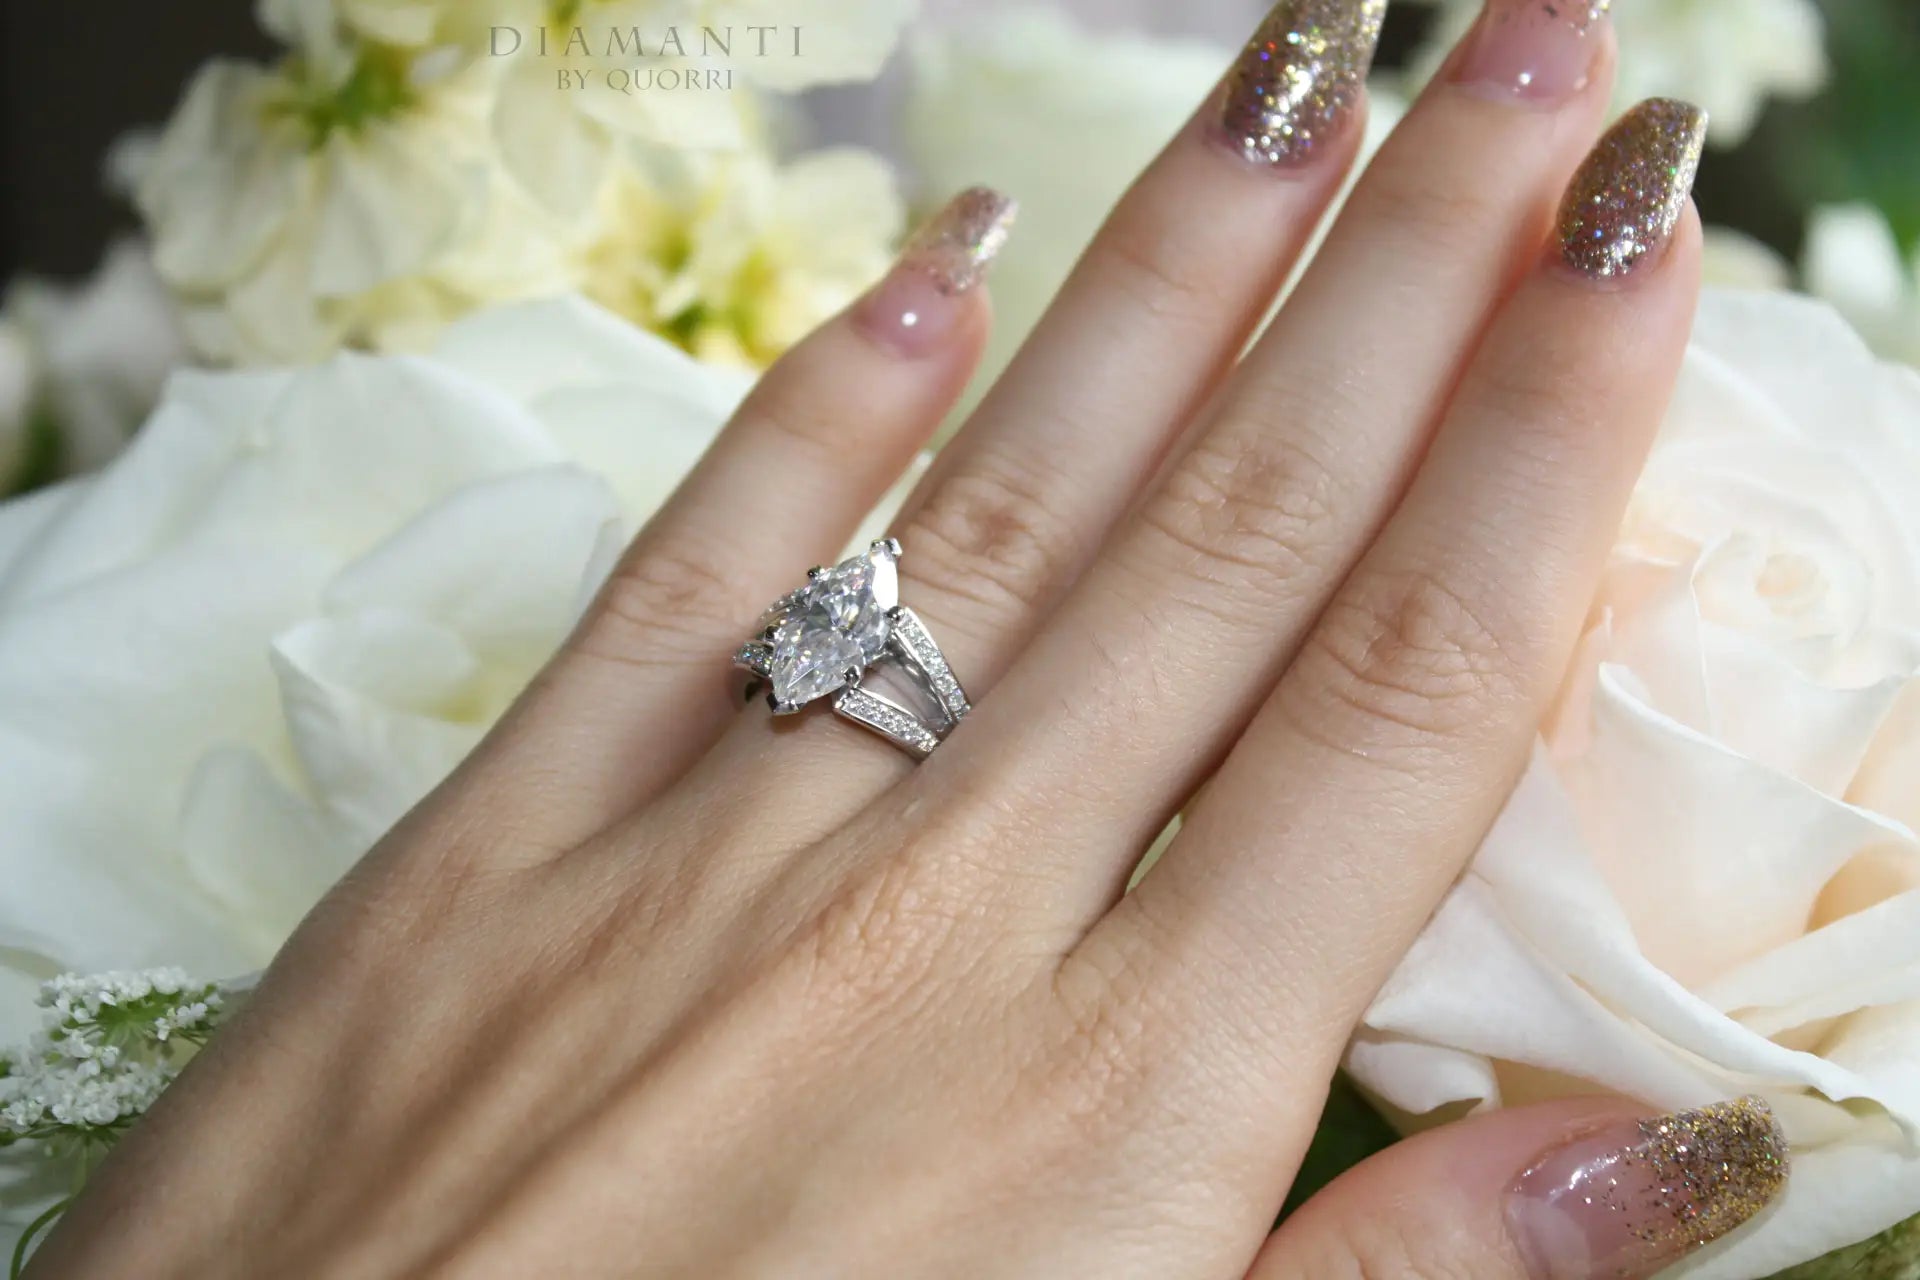 designer split band 4ct marquise lab grown diamond engagement ring Quorri